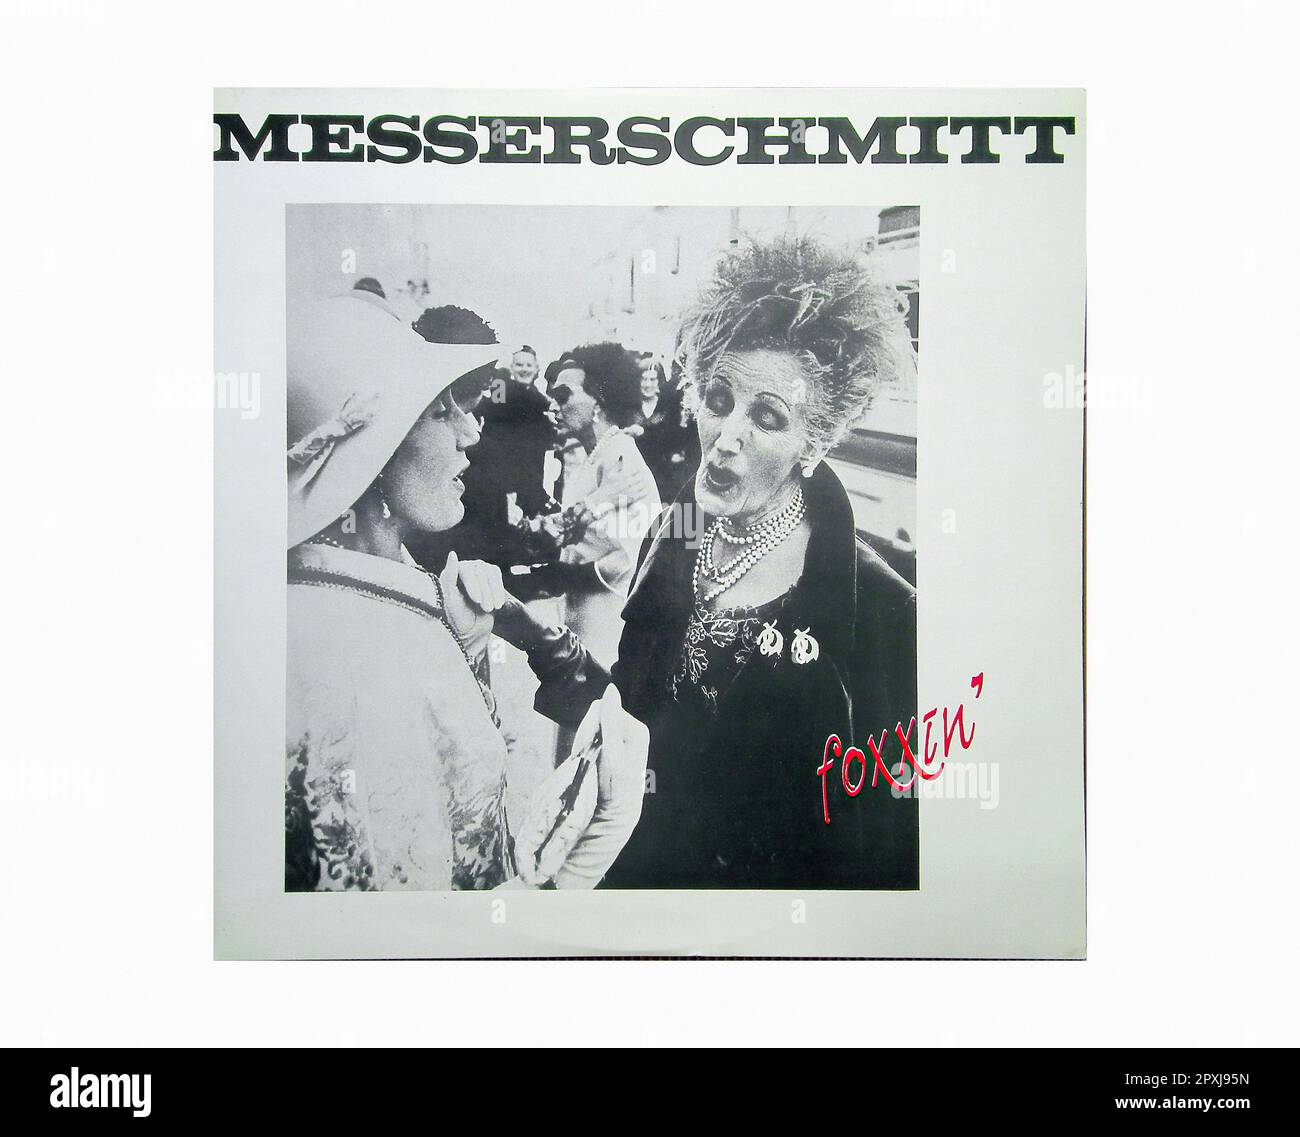 Messerschmitt - Foxxin' [1990] - Vintage Vinyl Record Sleeve Banque D'Images